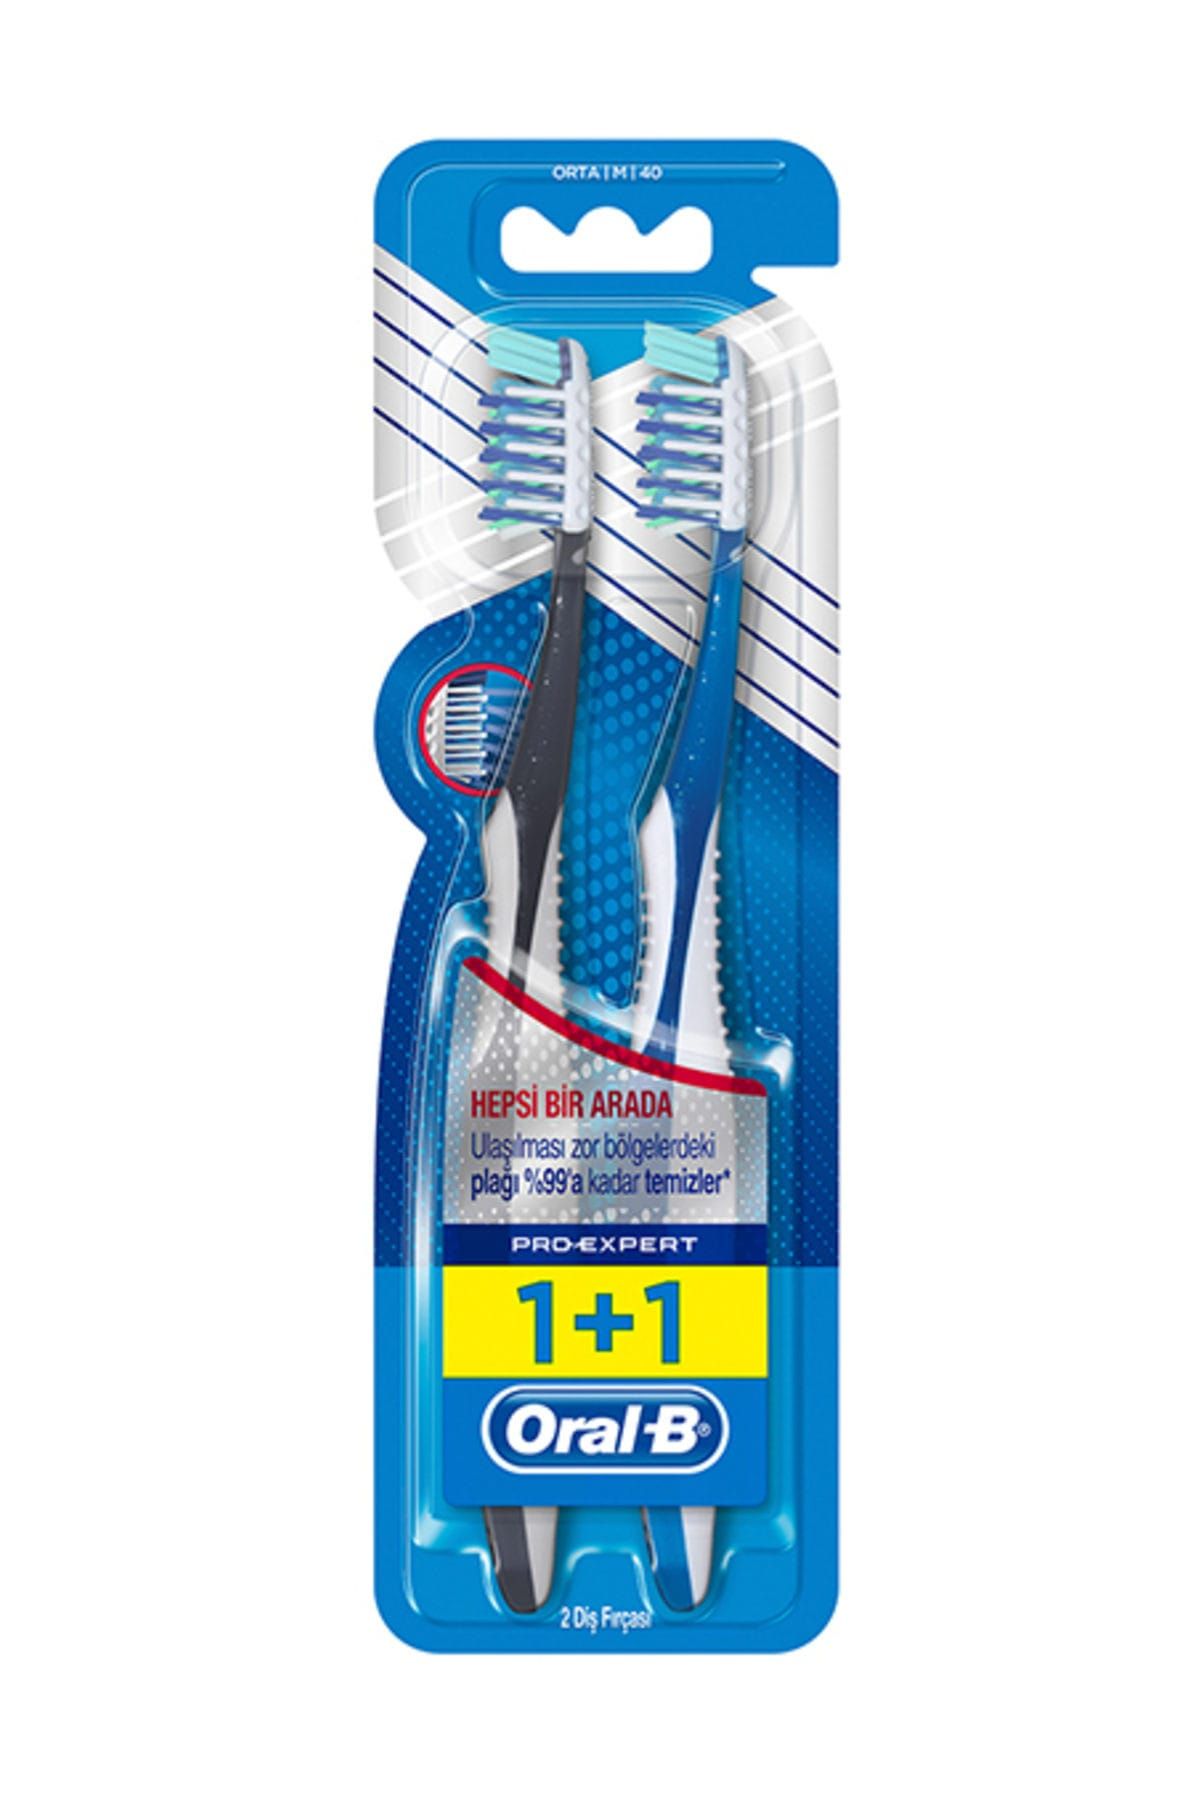 Oral-B Pro-expert Komple 7 Diş Fırçası 40 Orta ( 1+1 Paket )